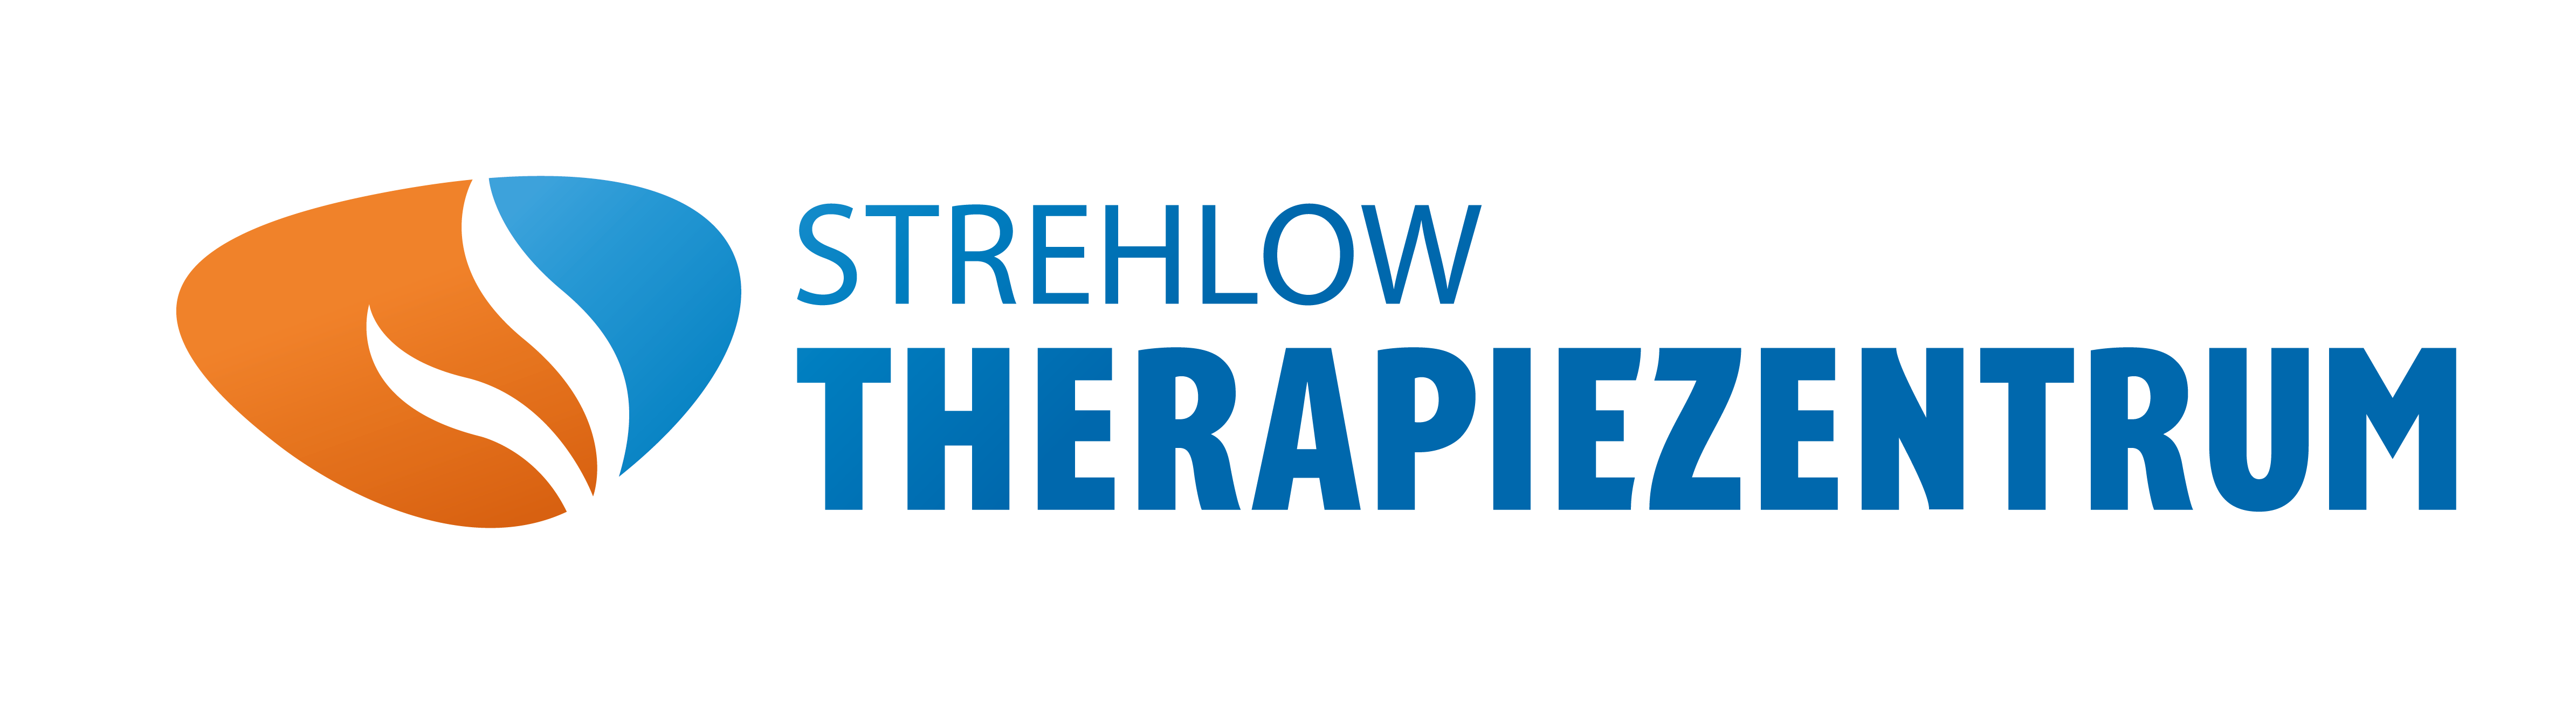 logo lang strehlow therapiezentrum 4c farbig